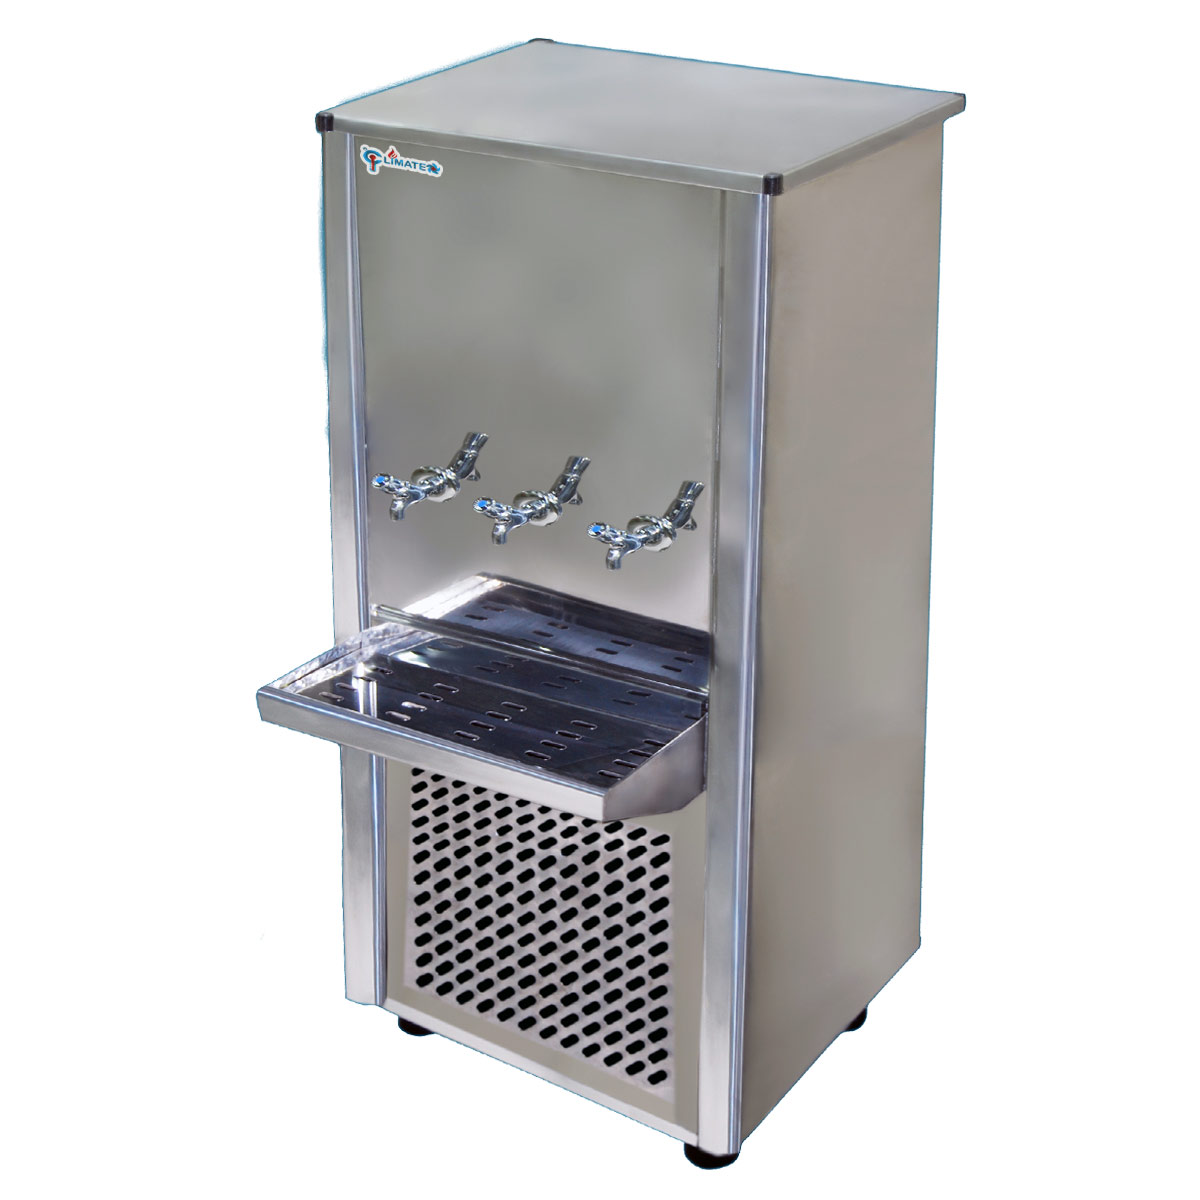 Stainless 2 Tap water cooler /dispenser